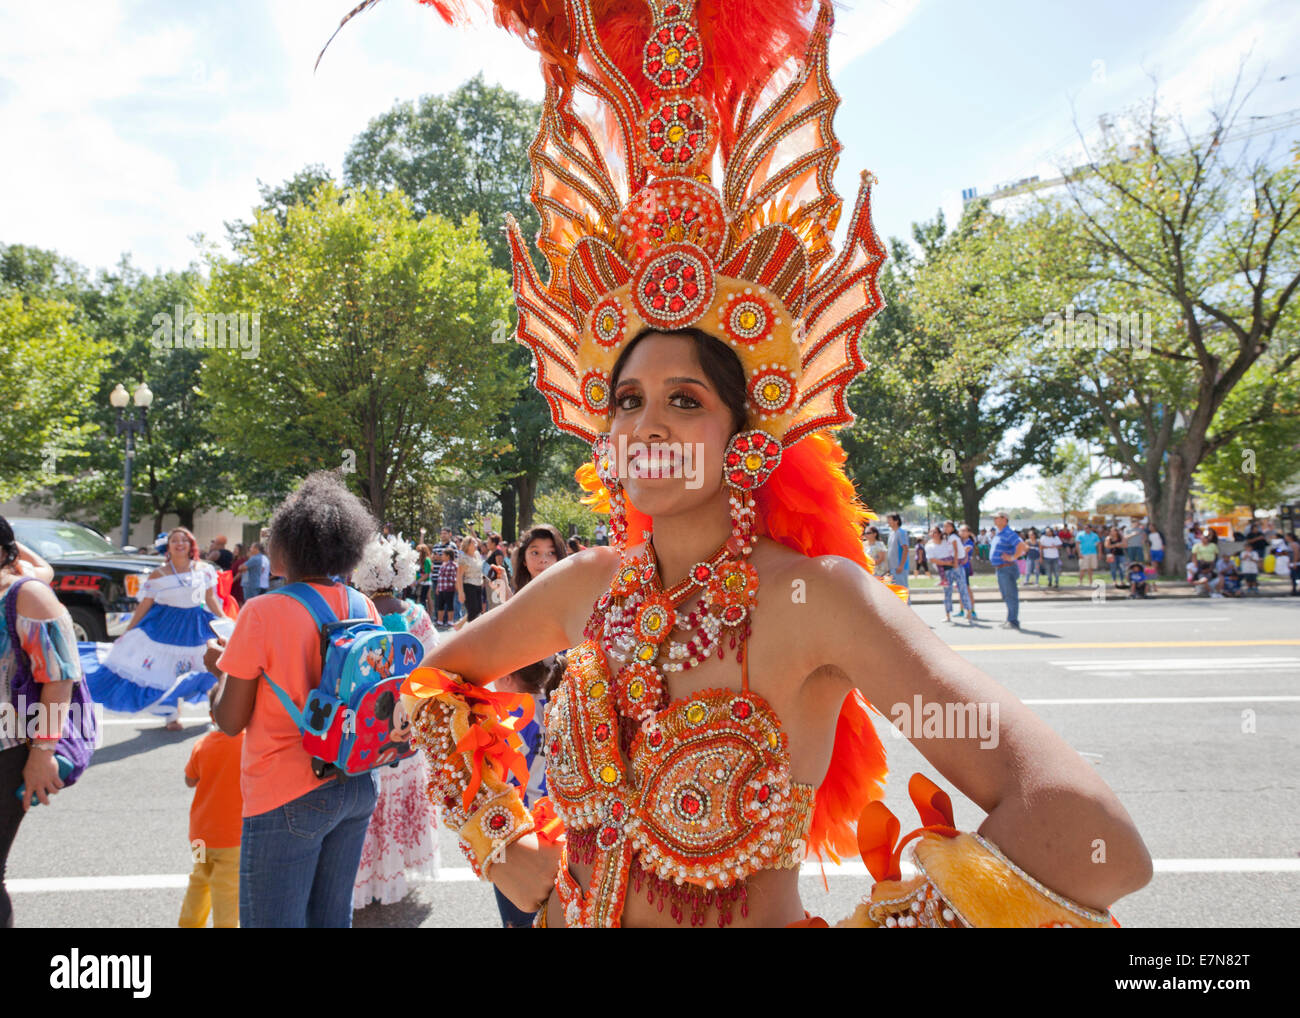 Carnaval Brasileño hembra bailarín de samba en traje tradicional - EE.UU. Foto de stock